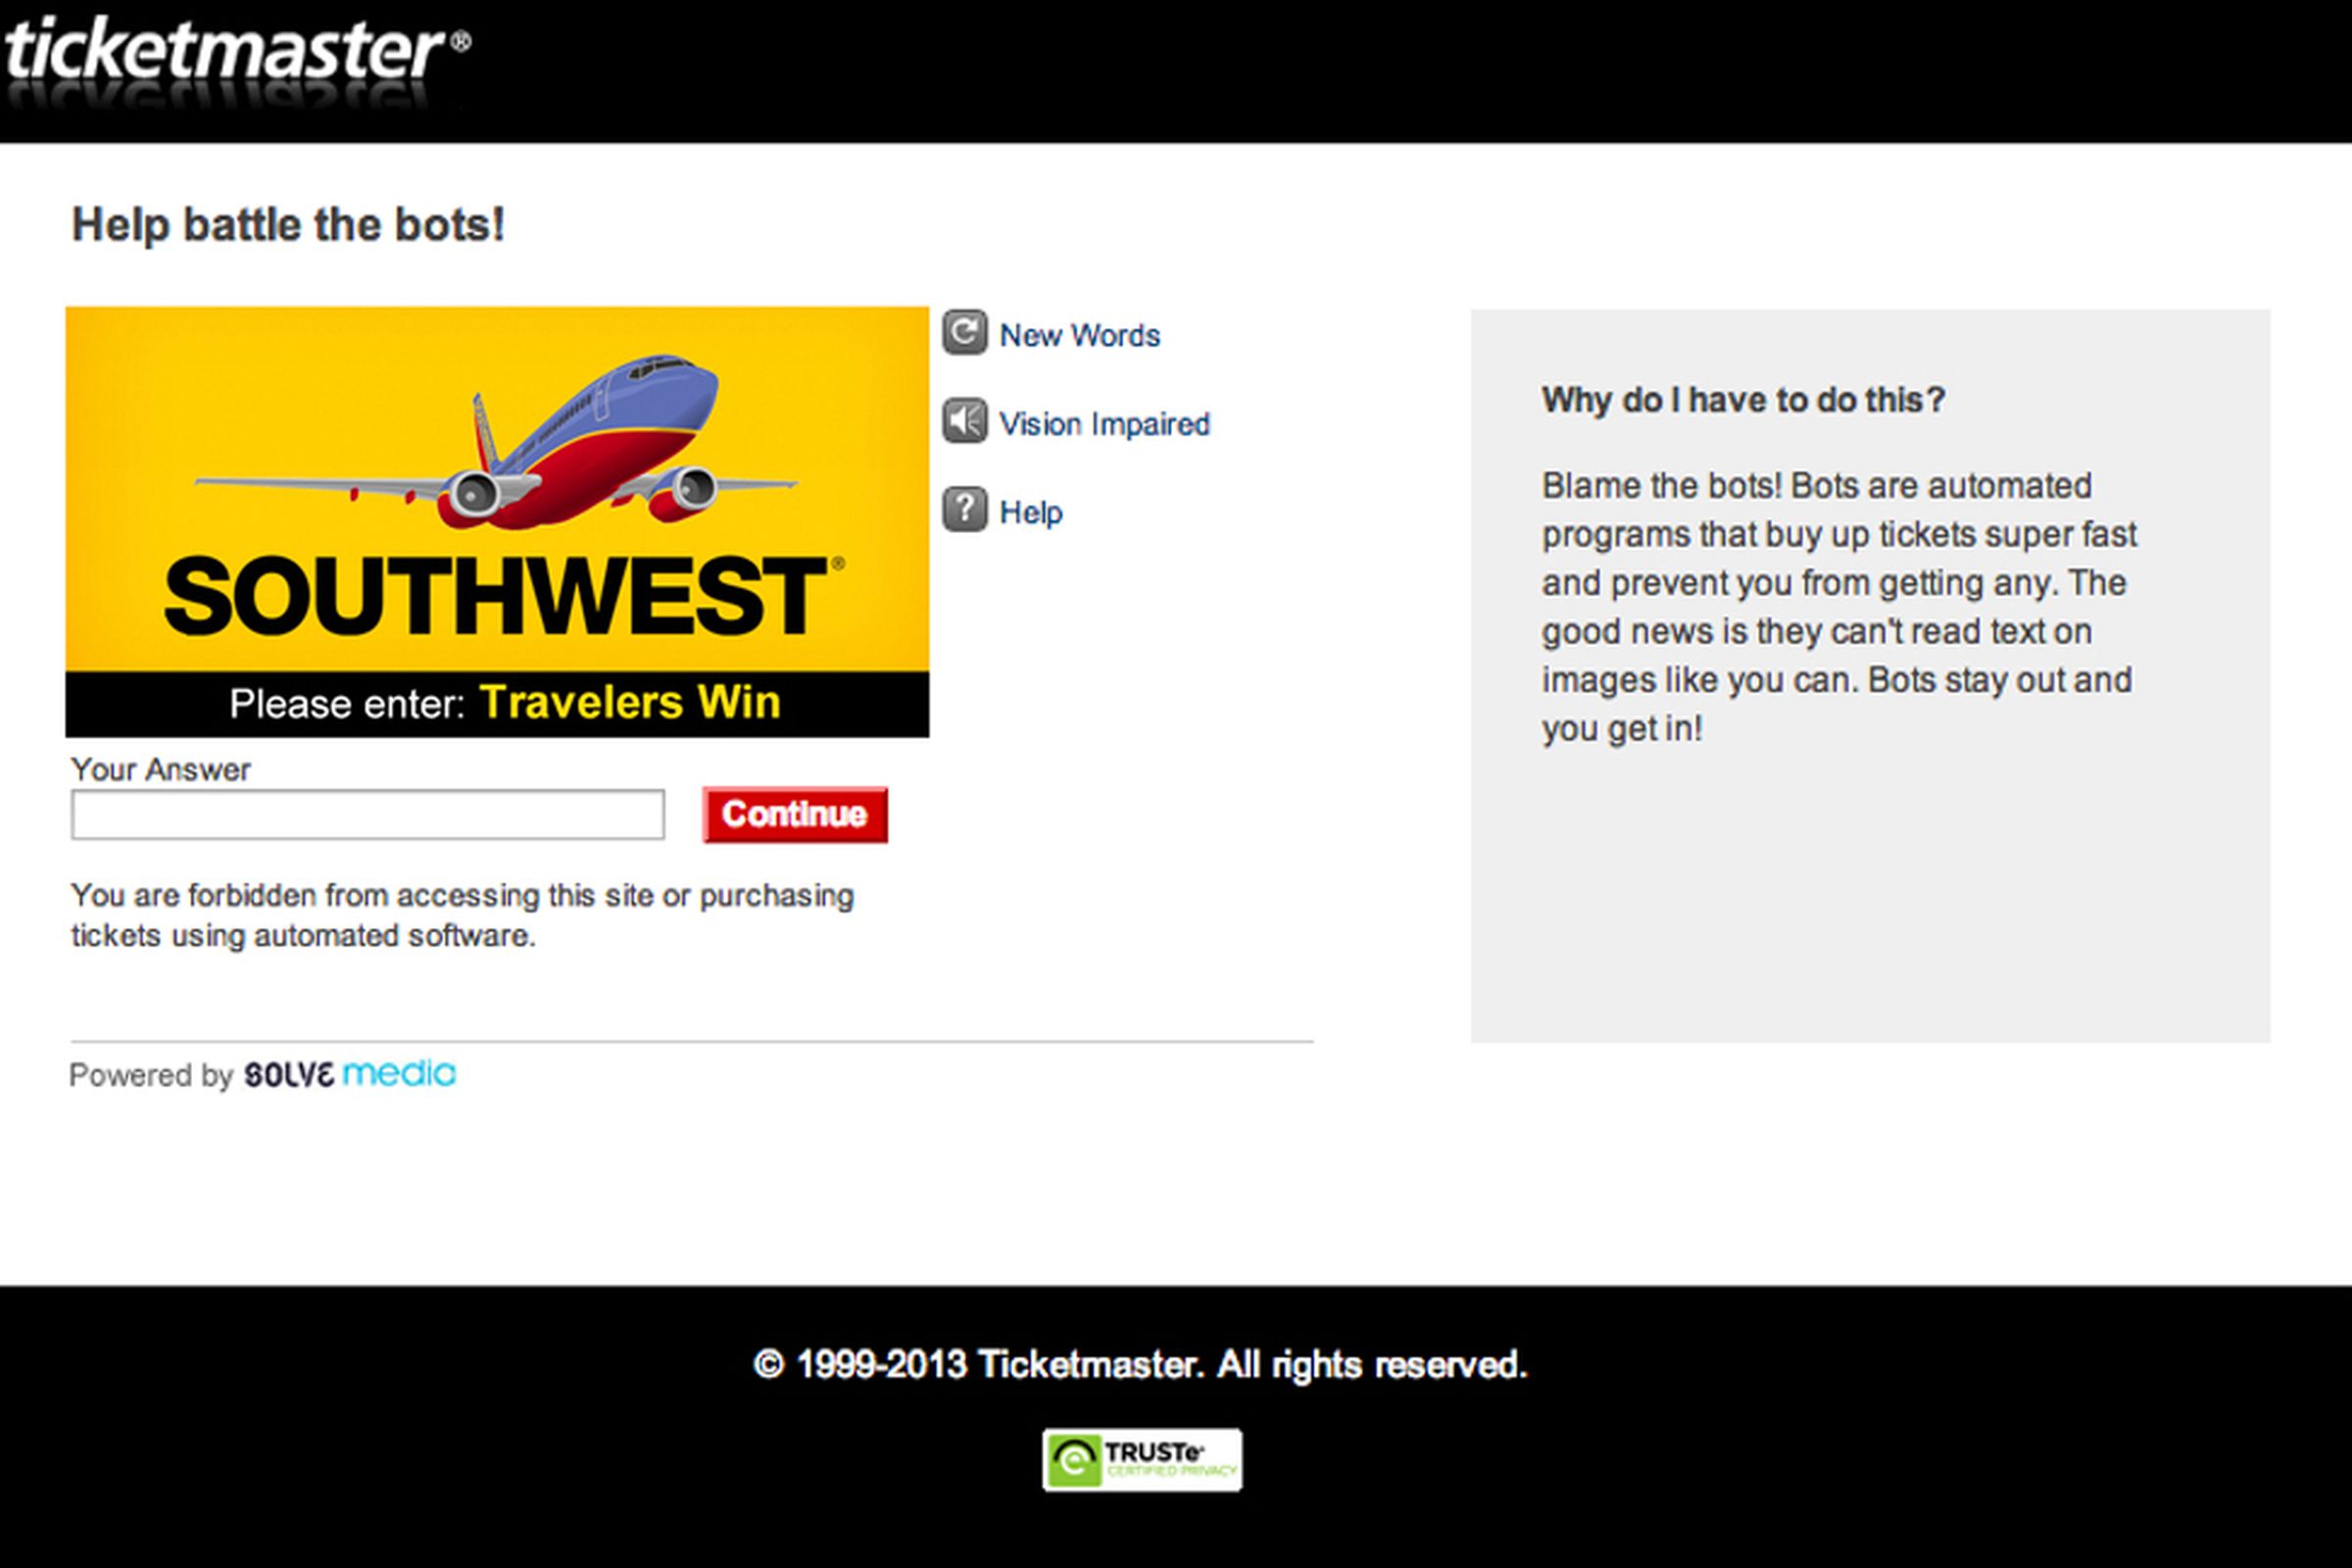 Ticketmaster Solve Media CAPTCHA system